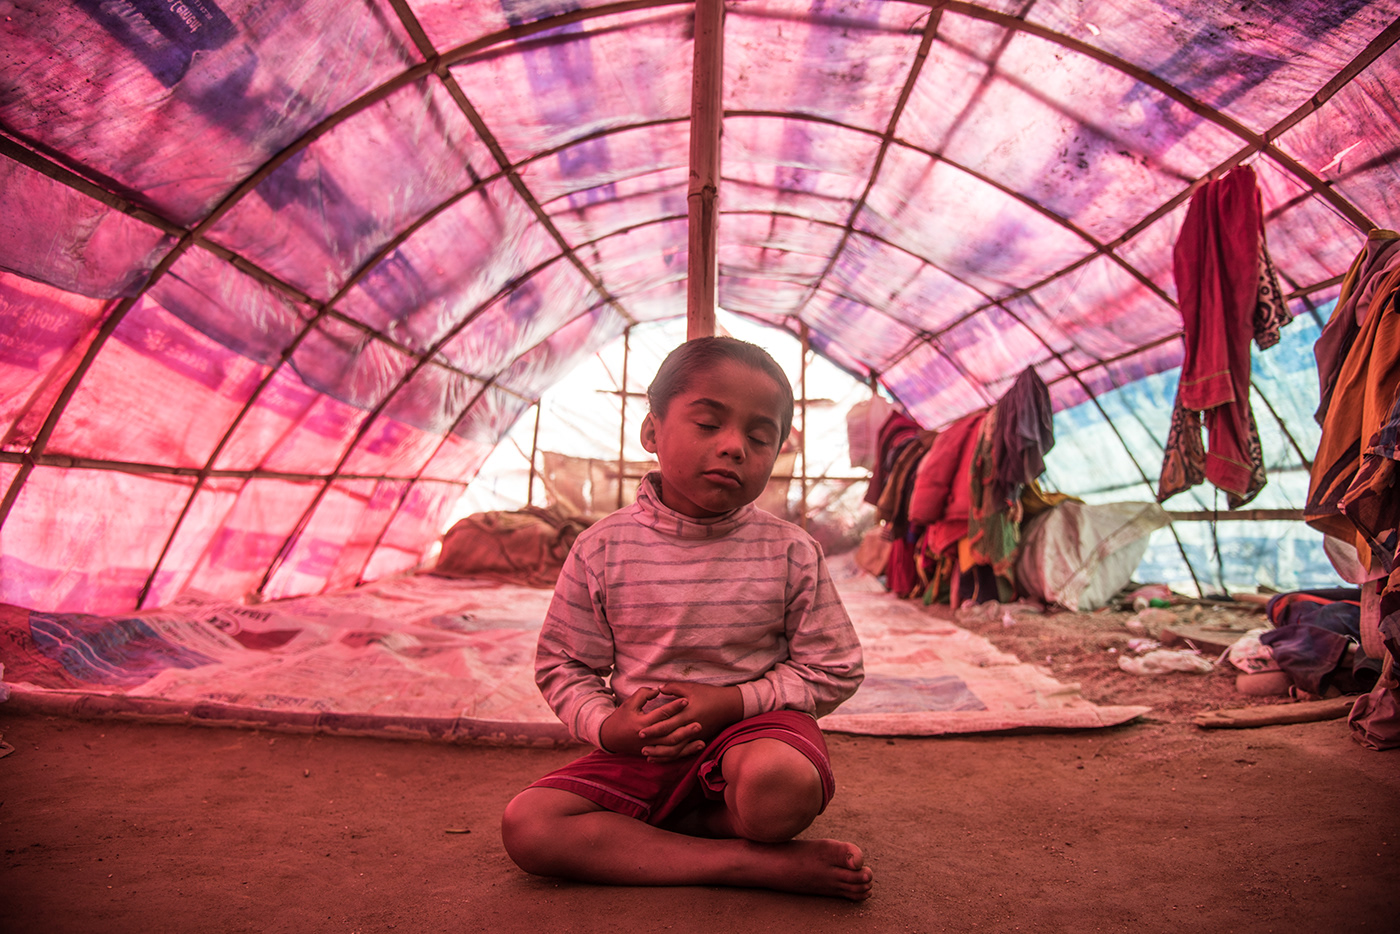 tent Bangladesh Travel jafflong immigrant refugee home